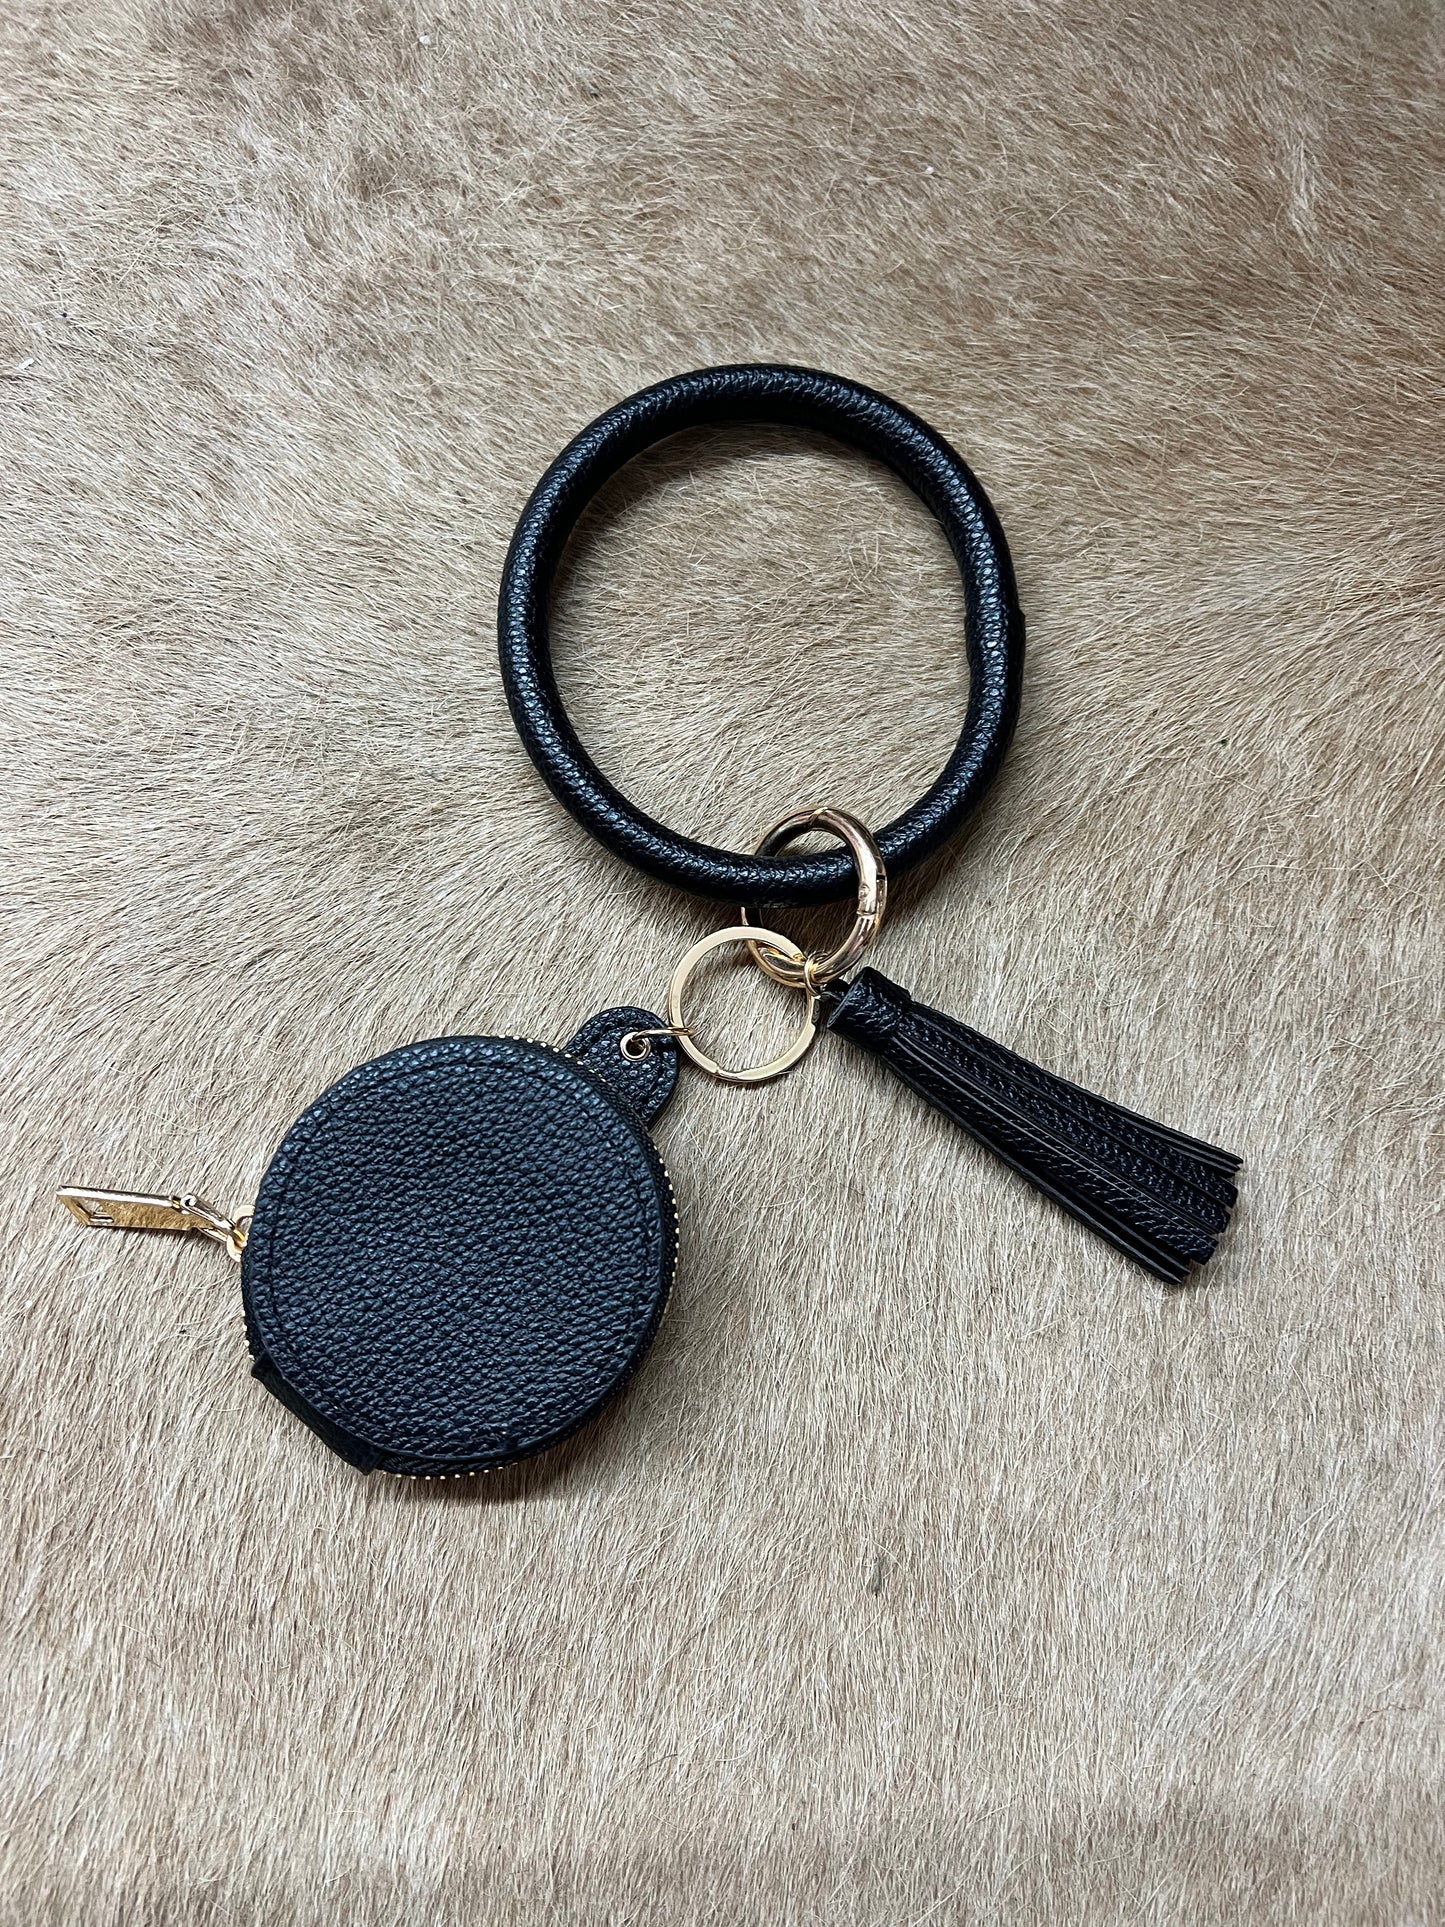 Black Leather Ring Bracelet Key Chain